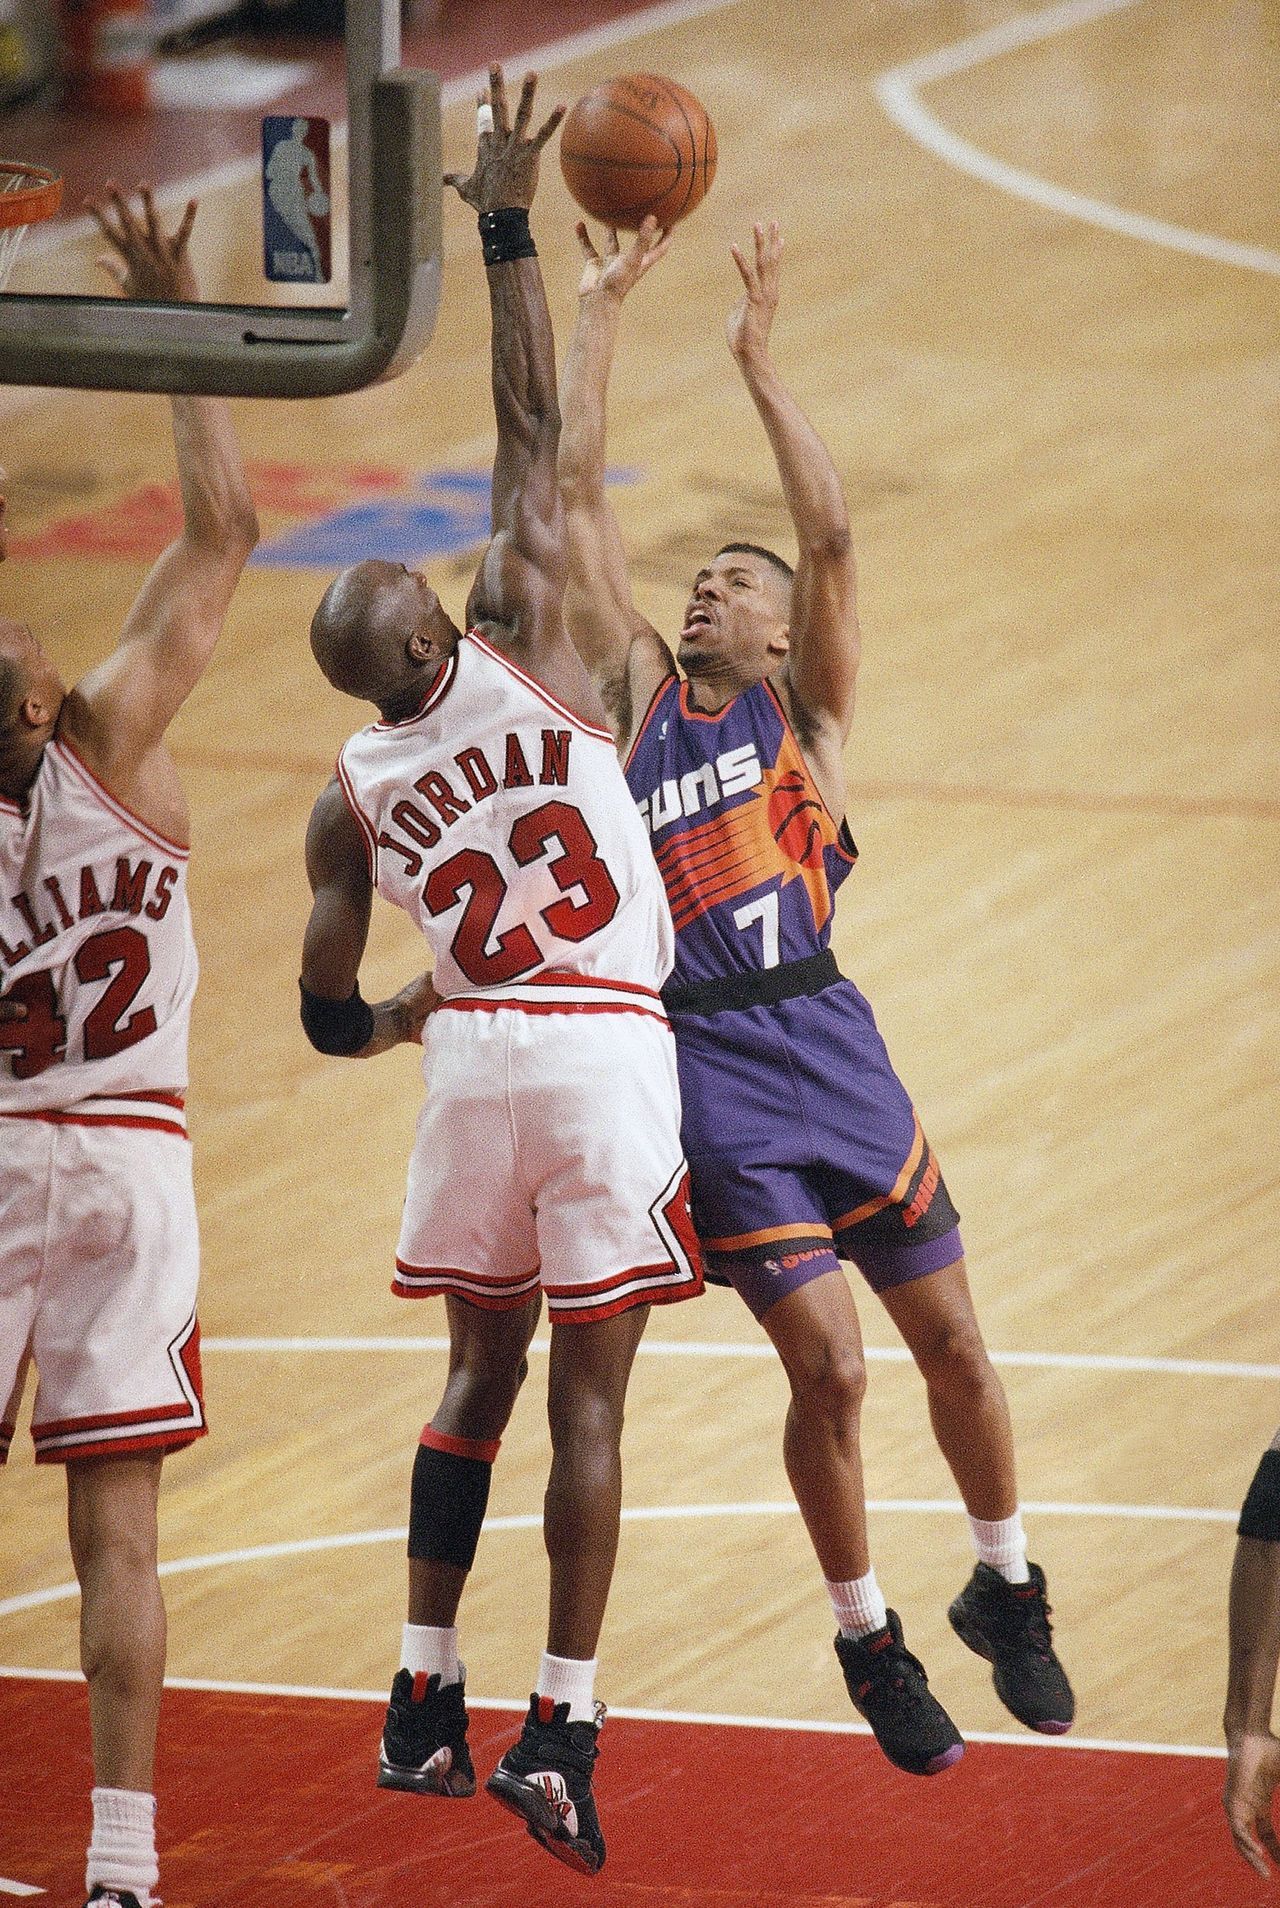 Michael Jordan going for a block vs Kevin Johnson in the 1993 NBA Finals.
See more at: jordanforlife23.tumblr.com